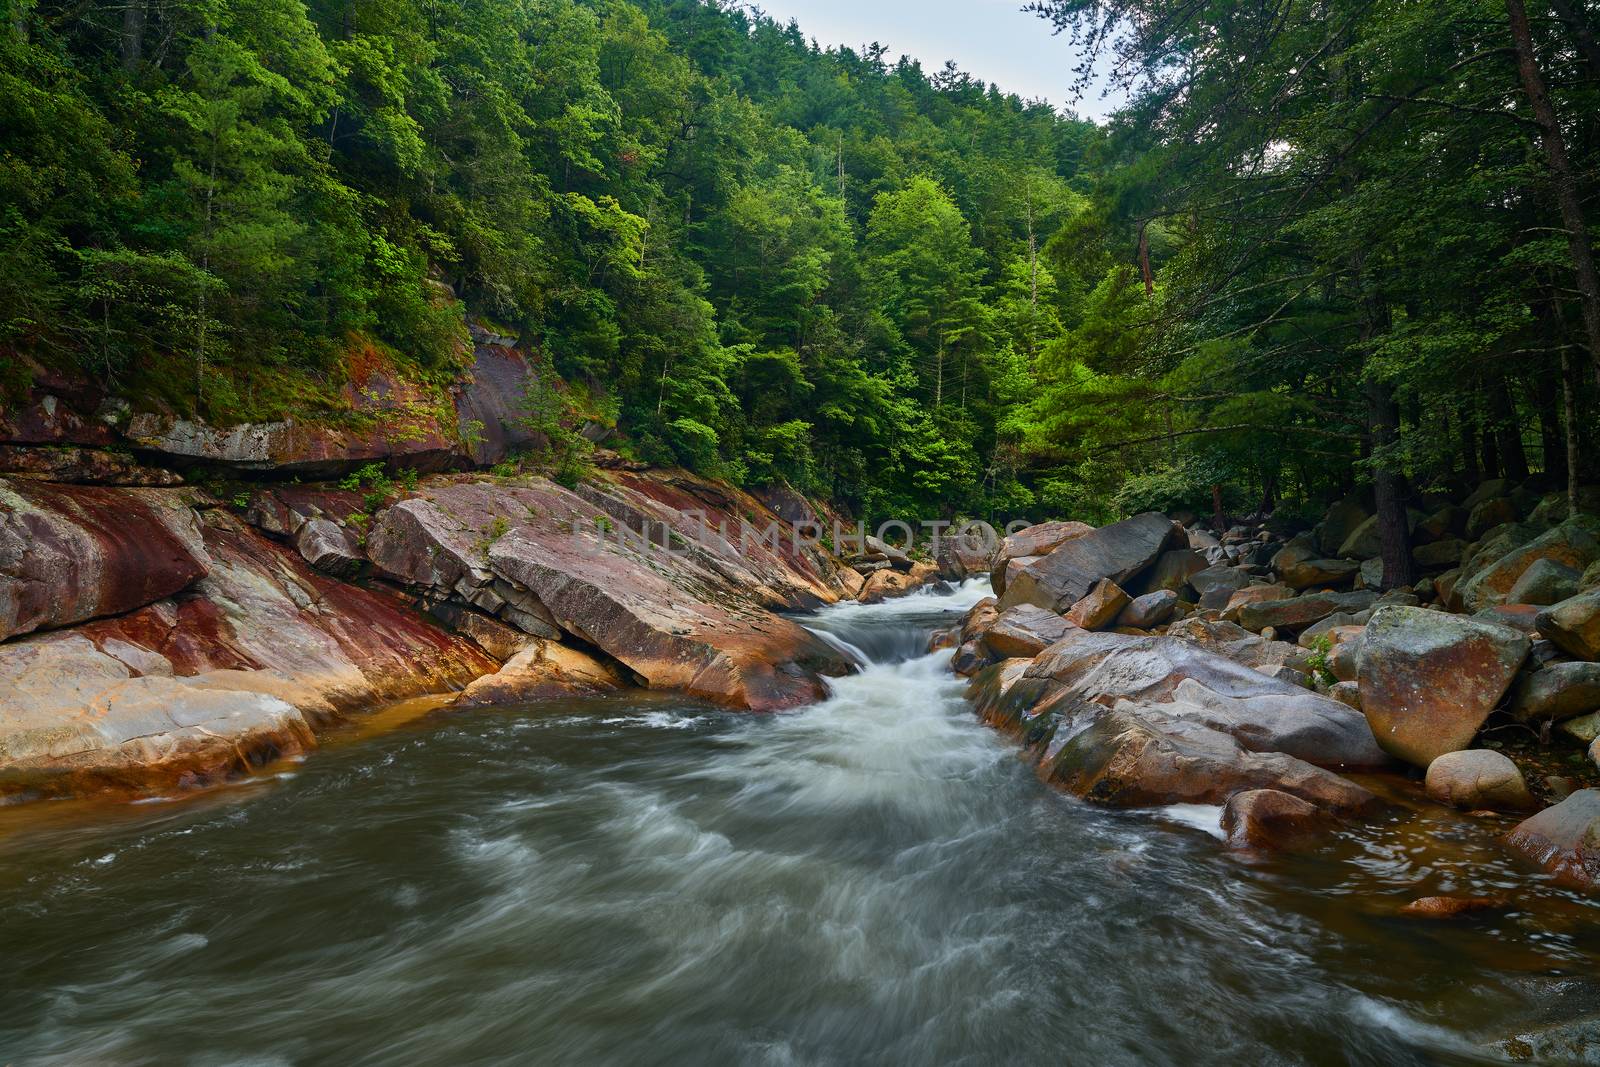 Rapids on Wilson Creek in North Carolina.